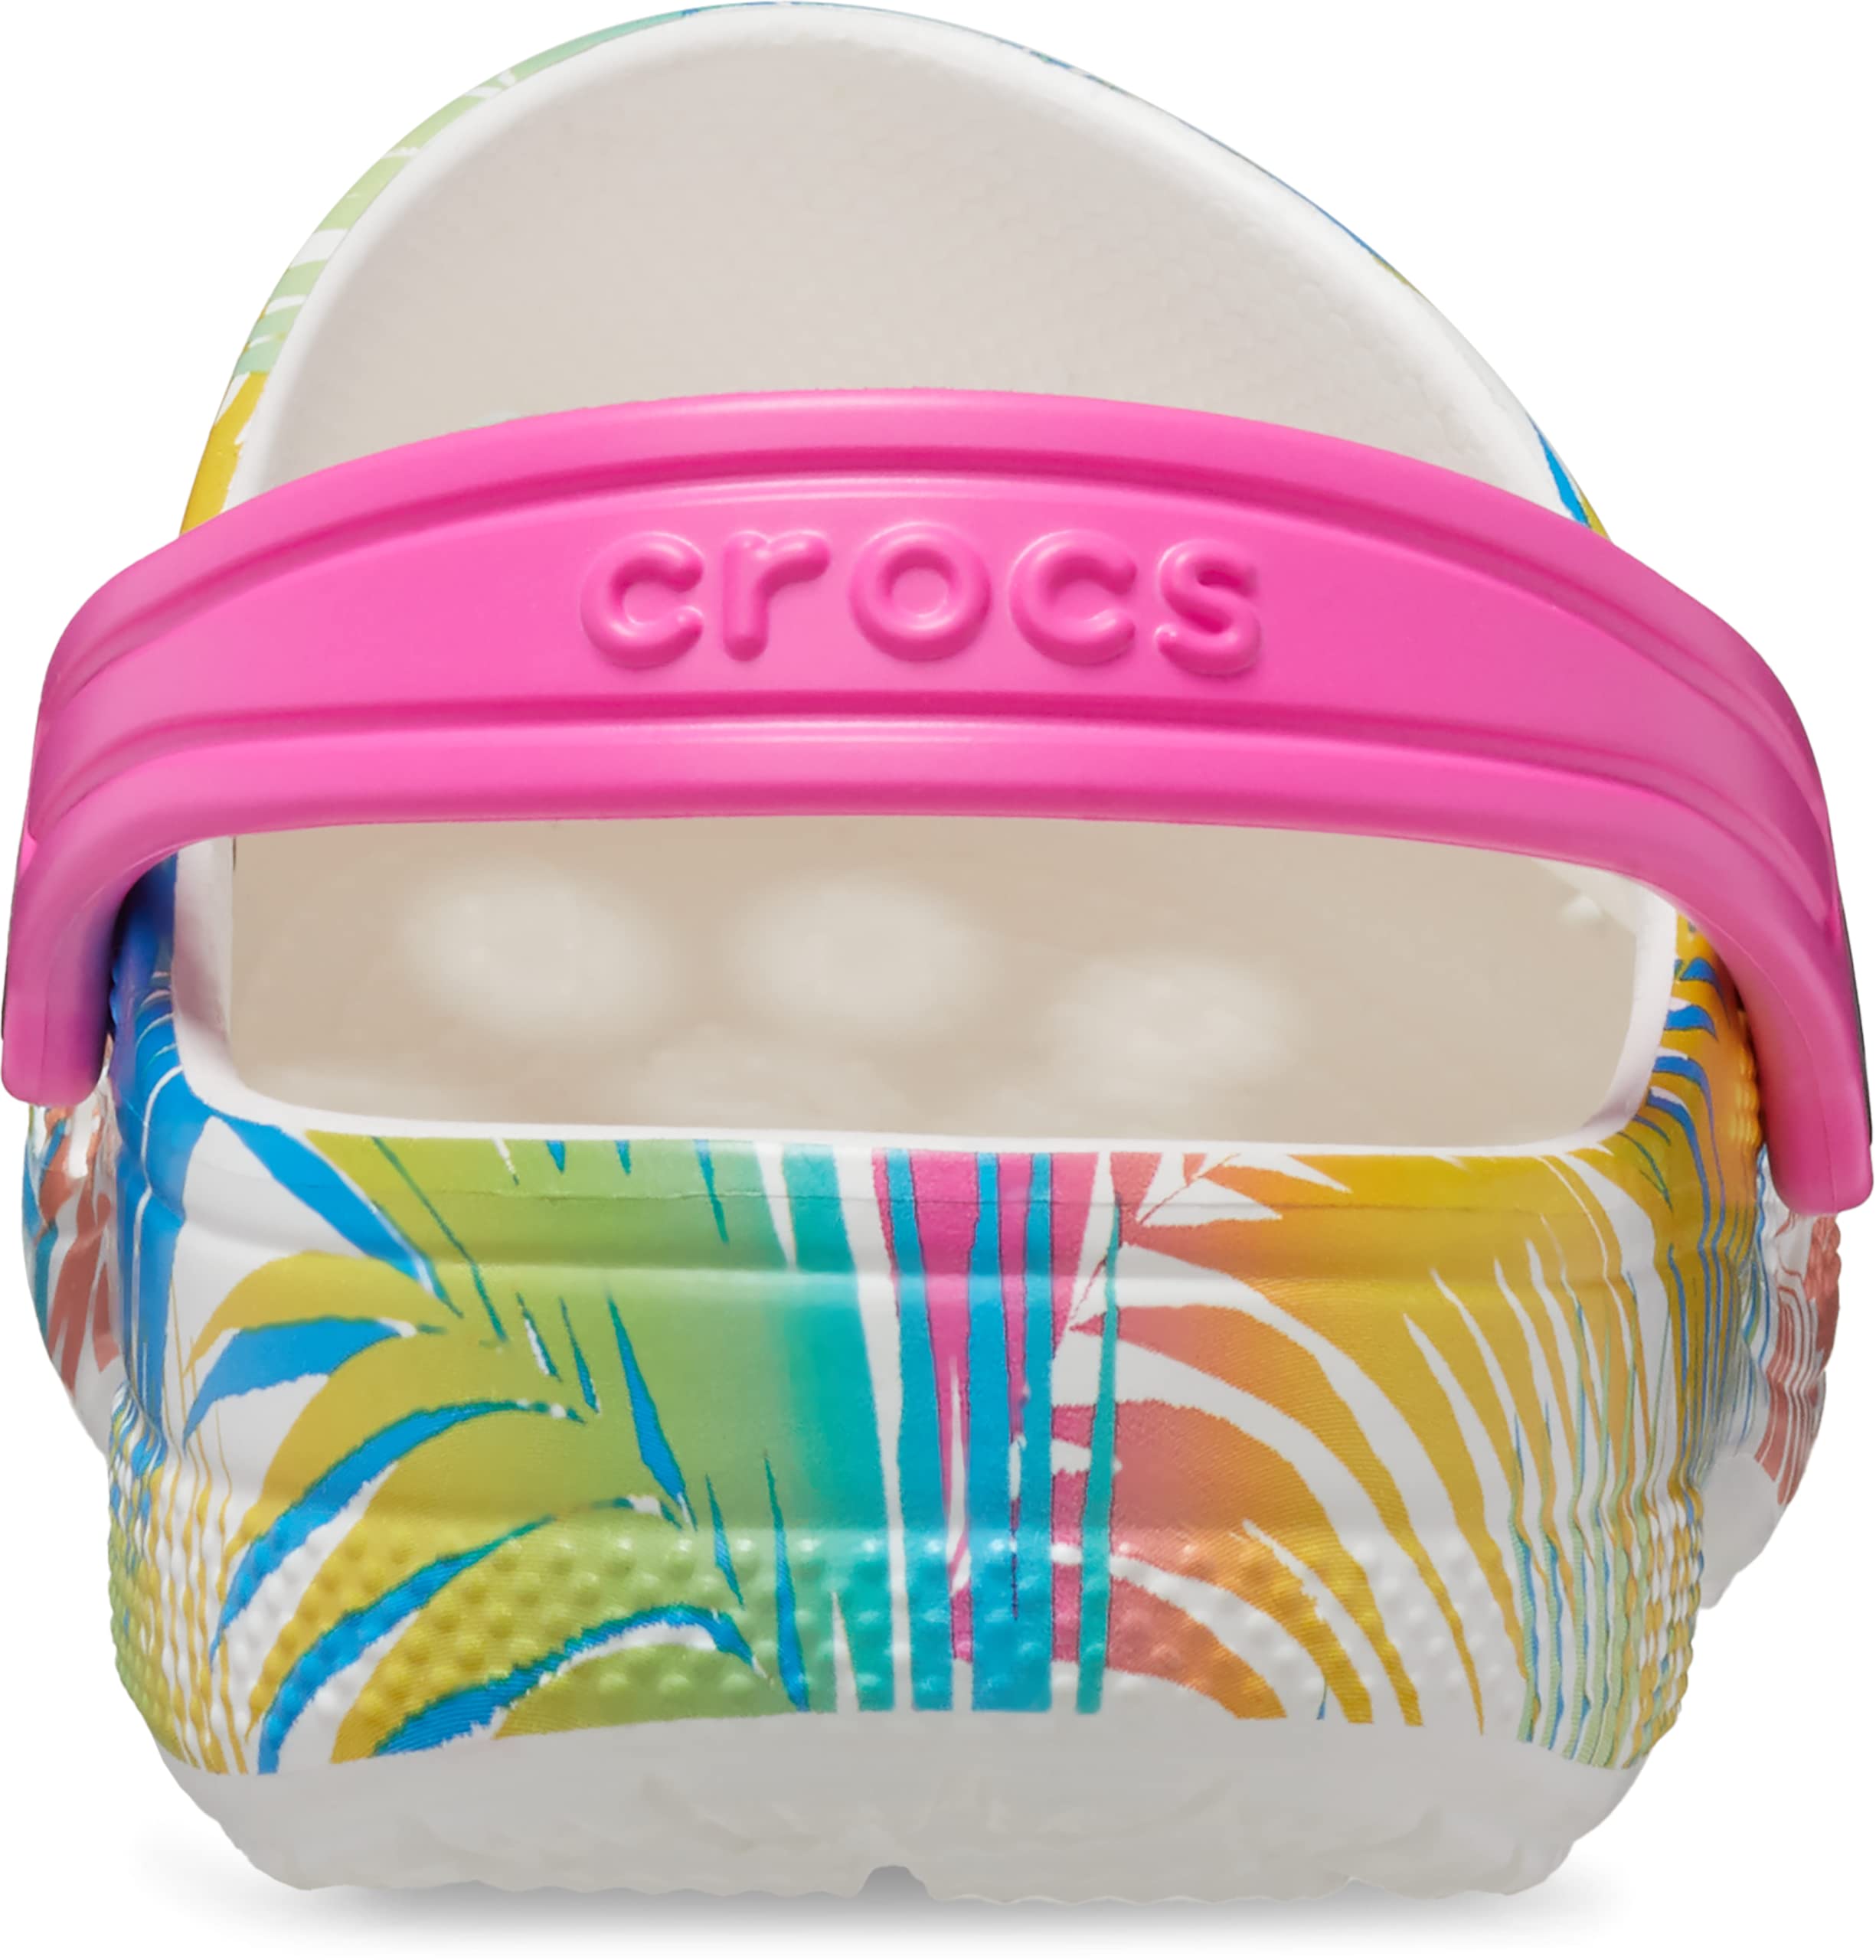 Crocs Unisex-Child Baya Graphic Tie-Dye Clogs